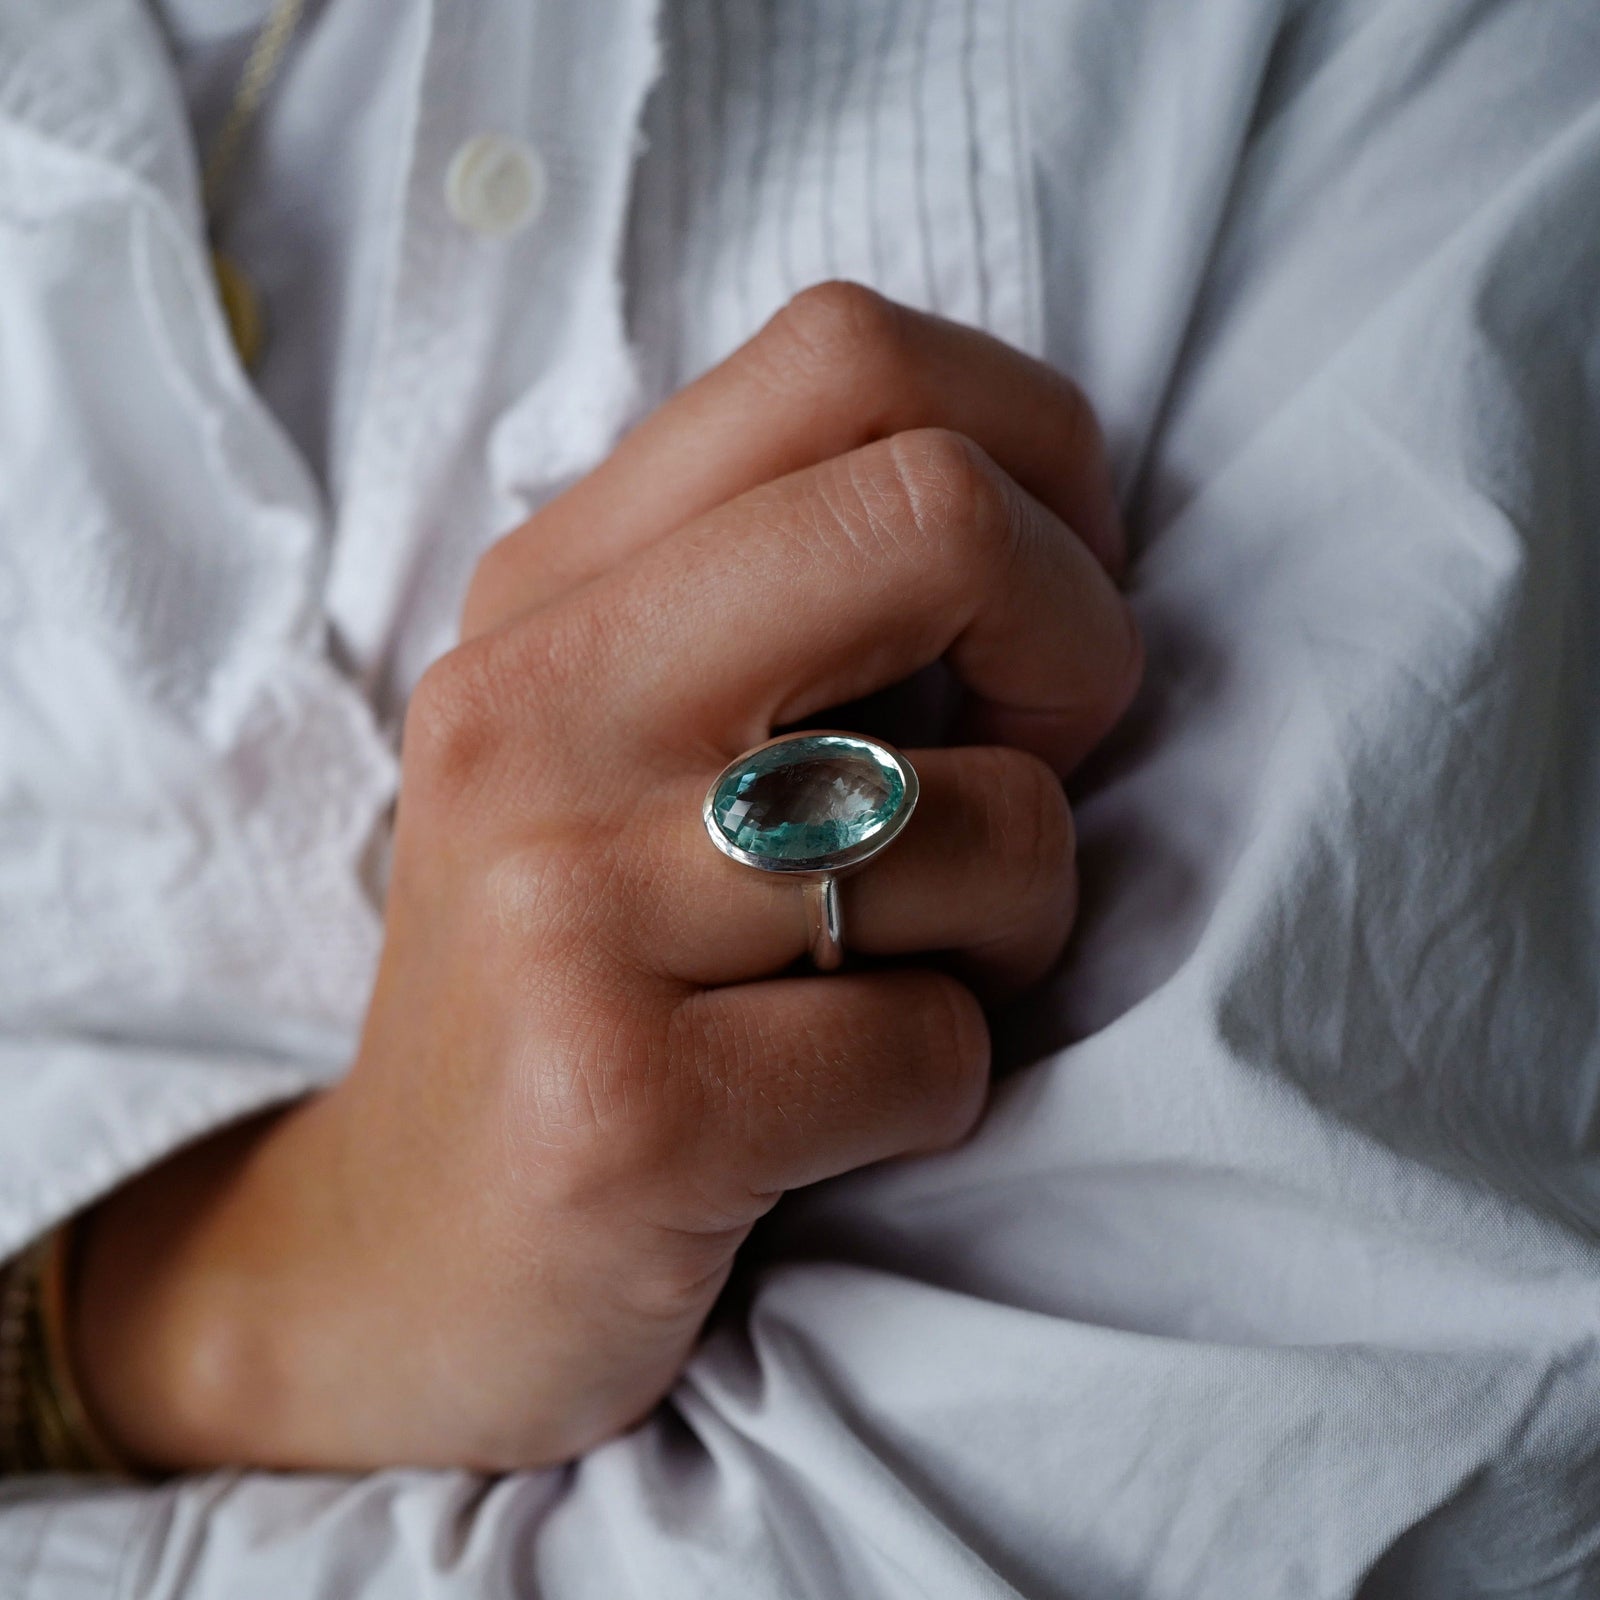 AARNA Silver Aquamarine Ring